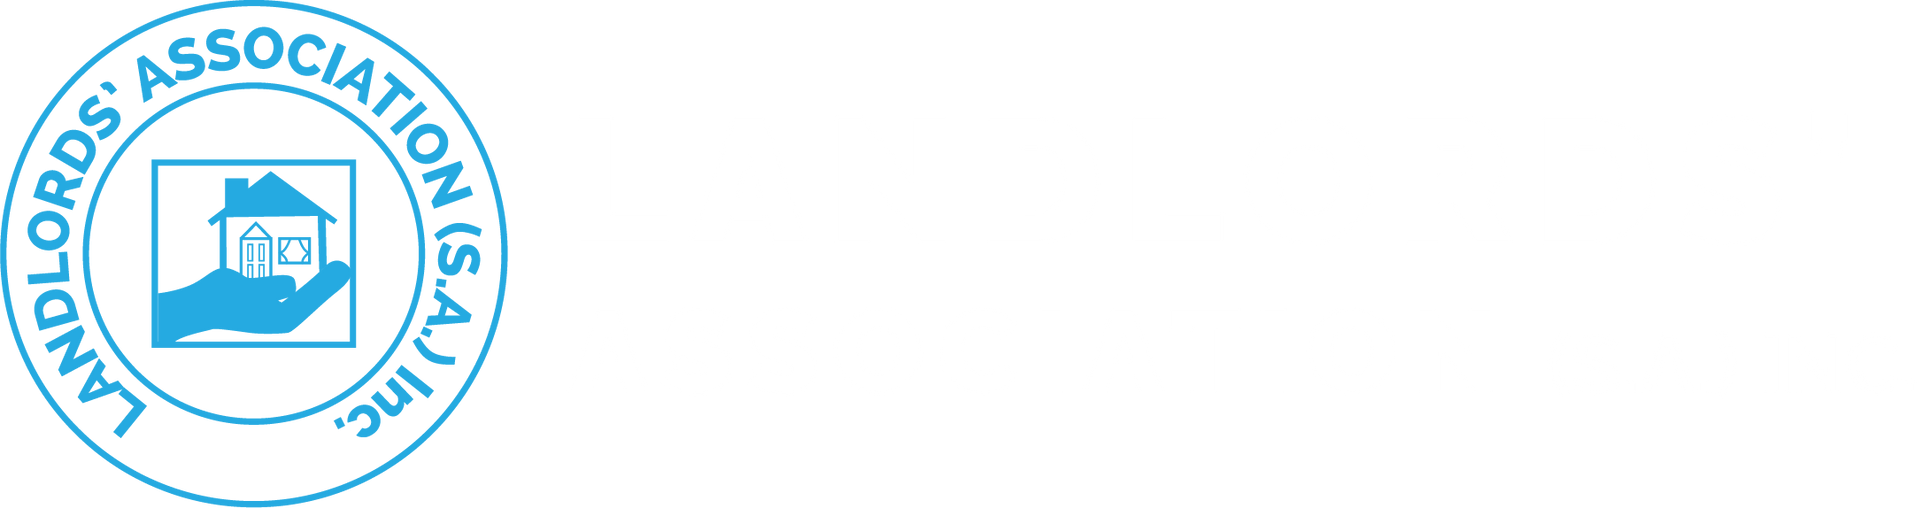 Landlords’ Association (S.A.) Inc.